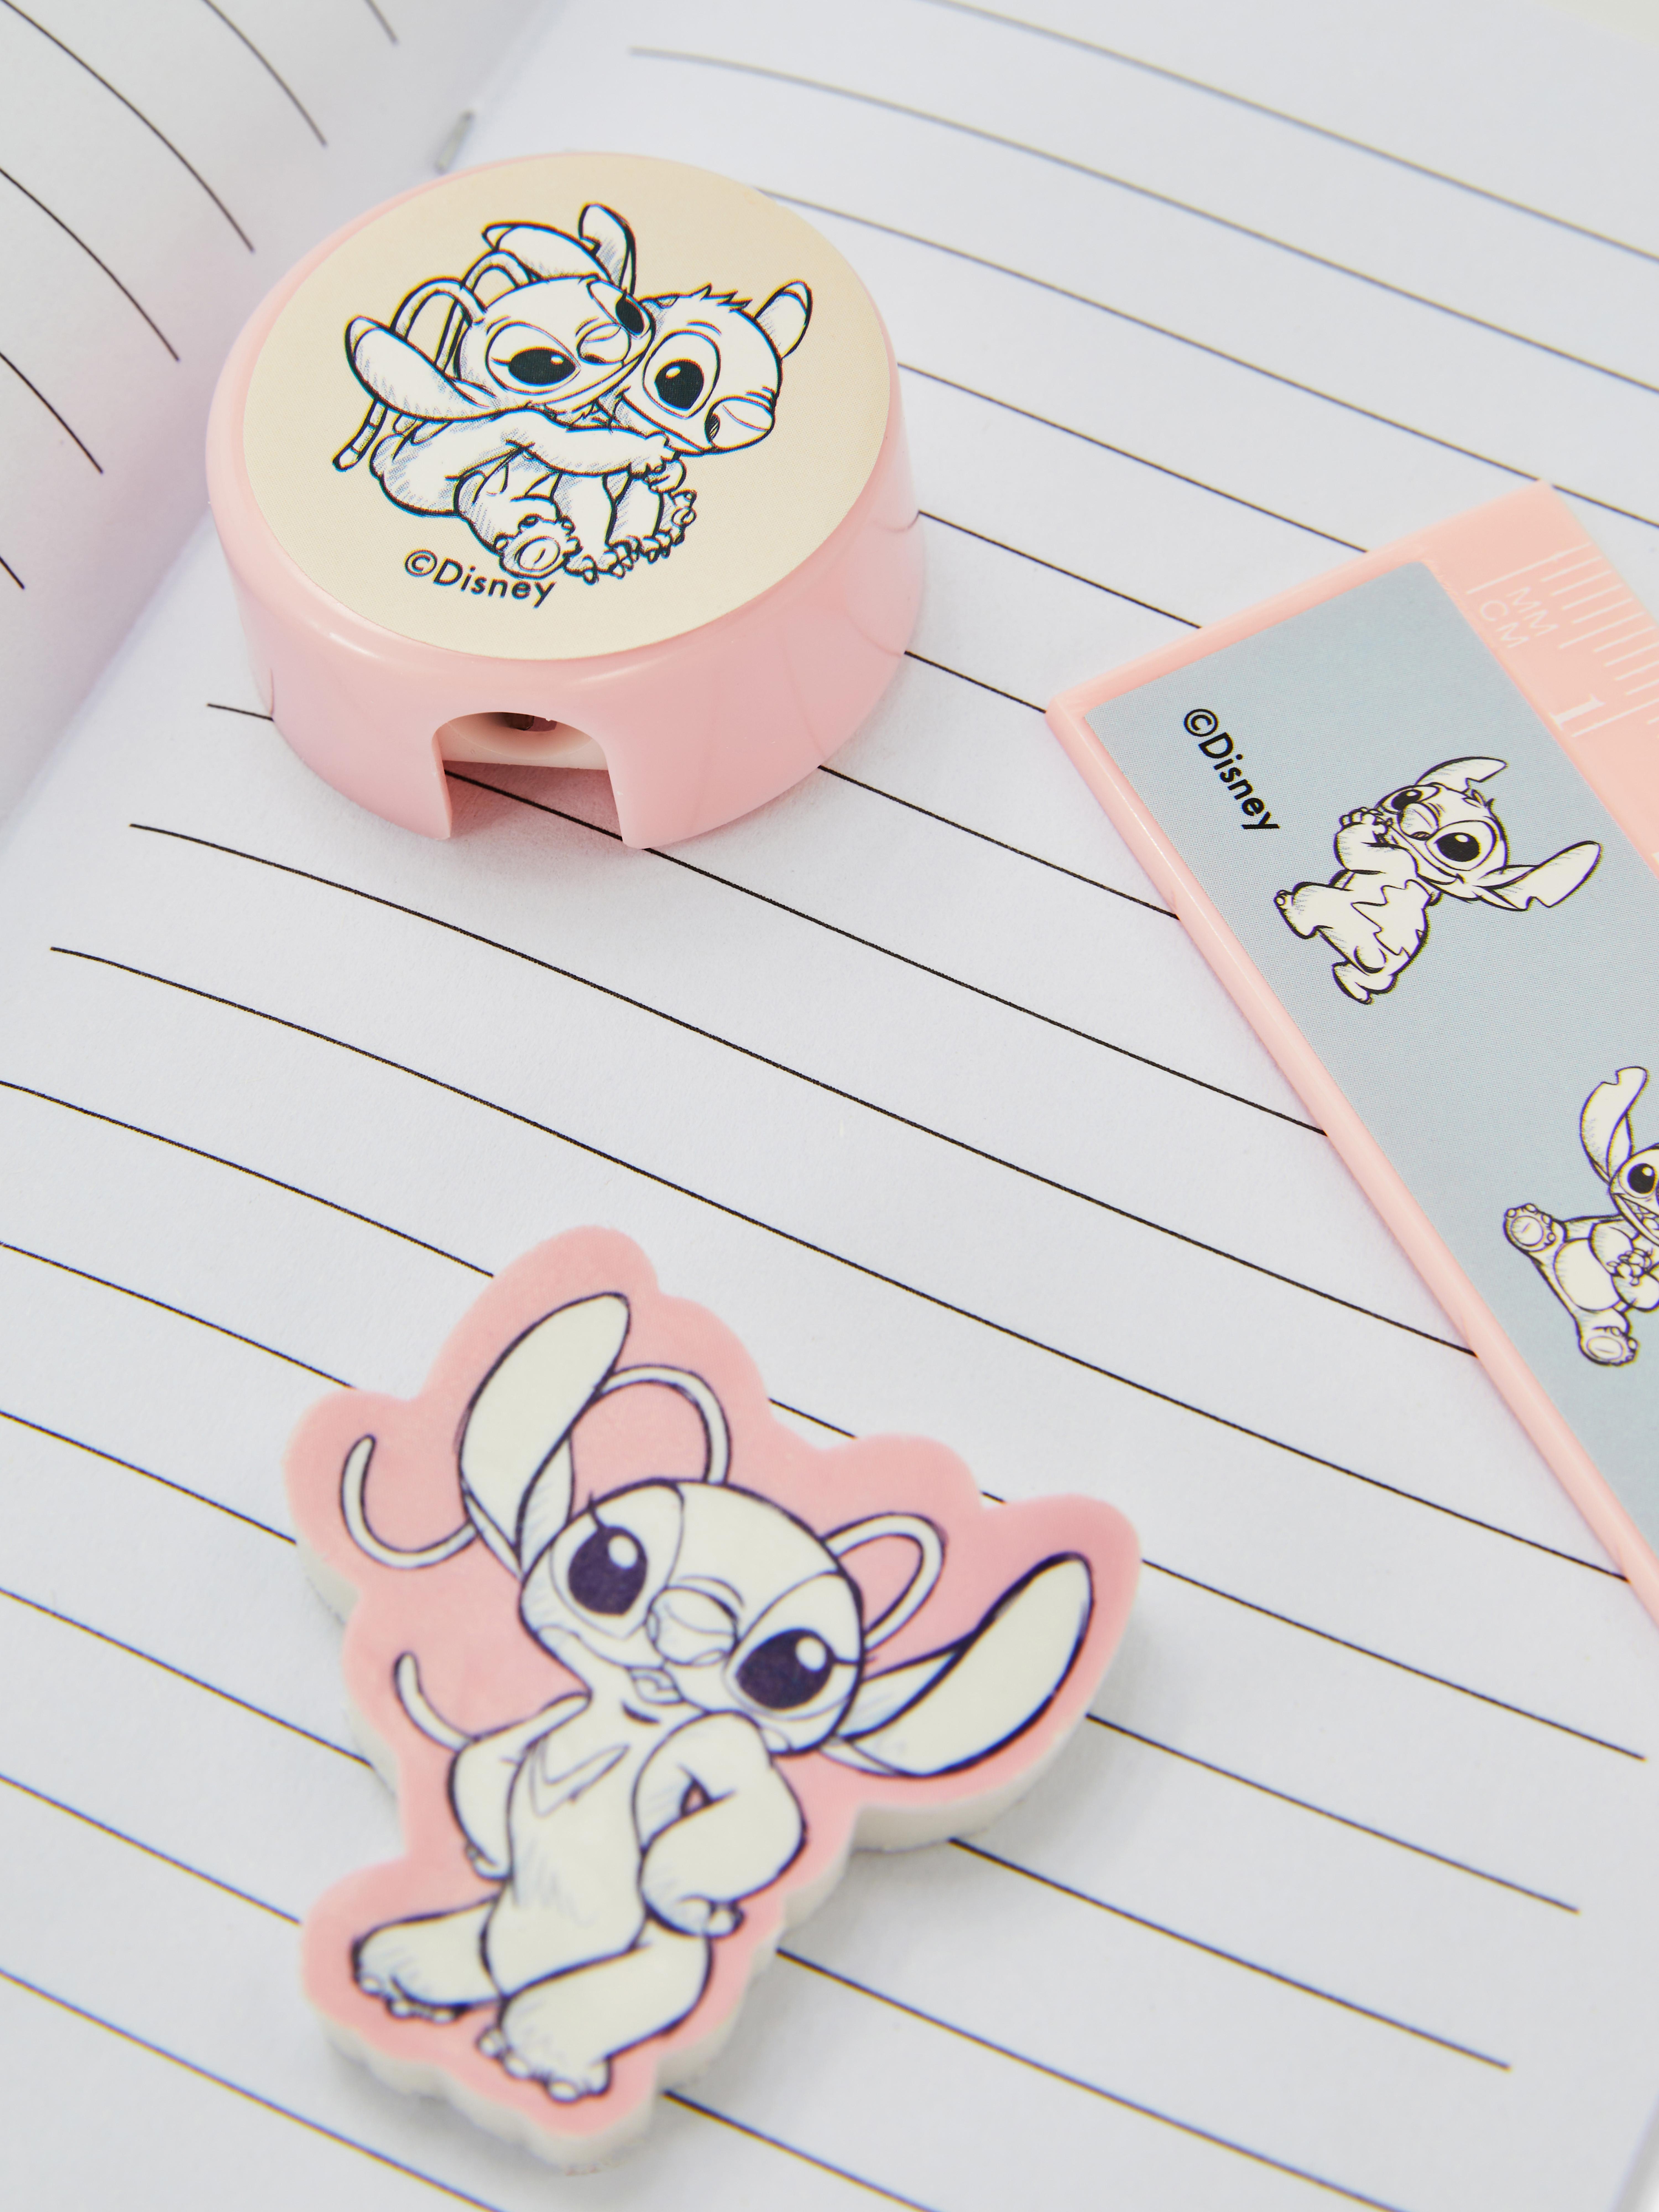 Disney’s Lilo & Stitch Stationery Set